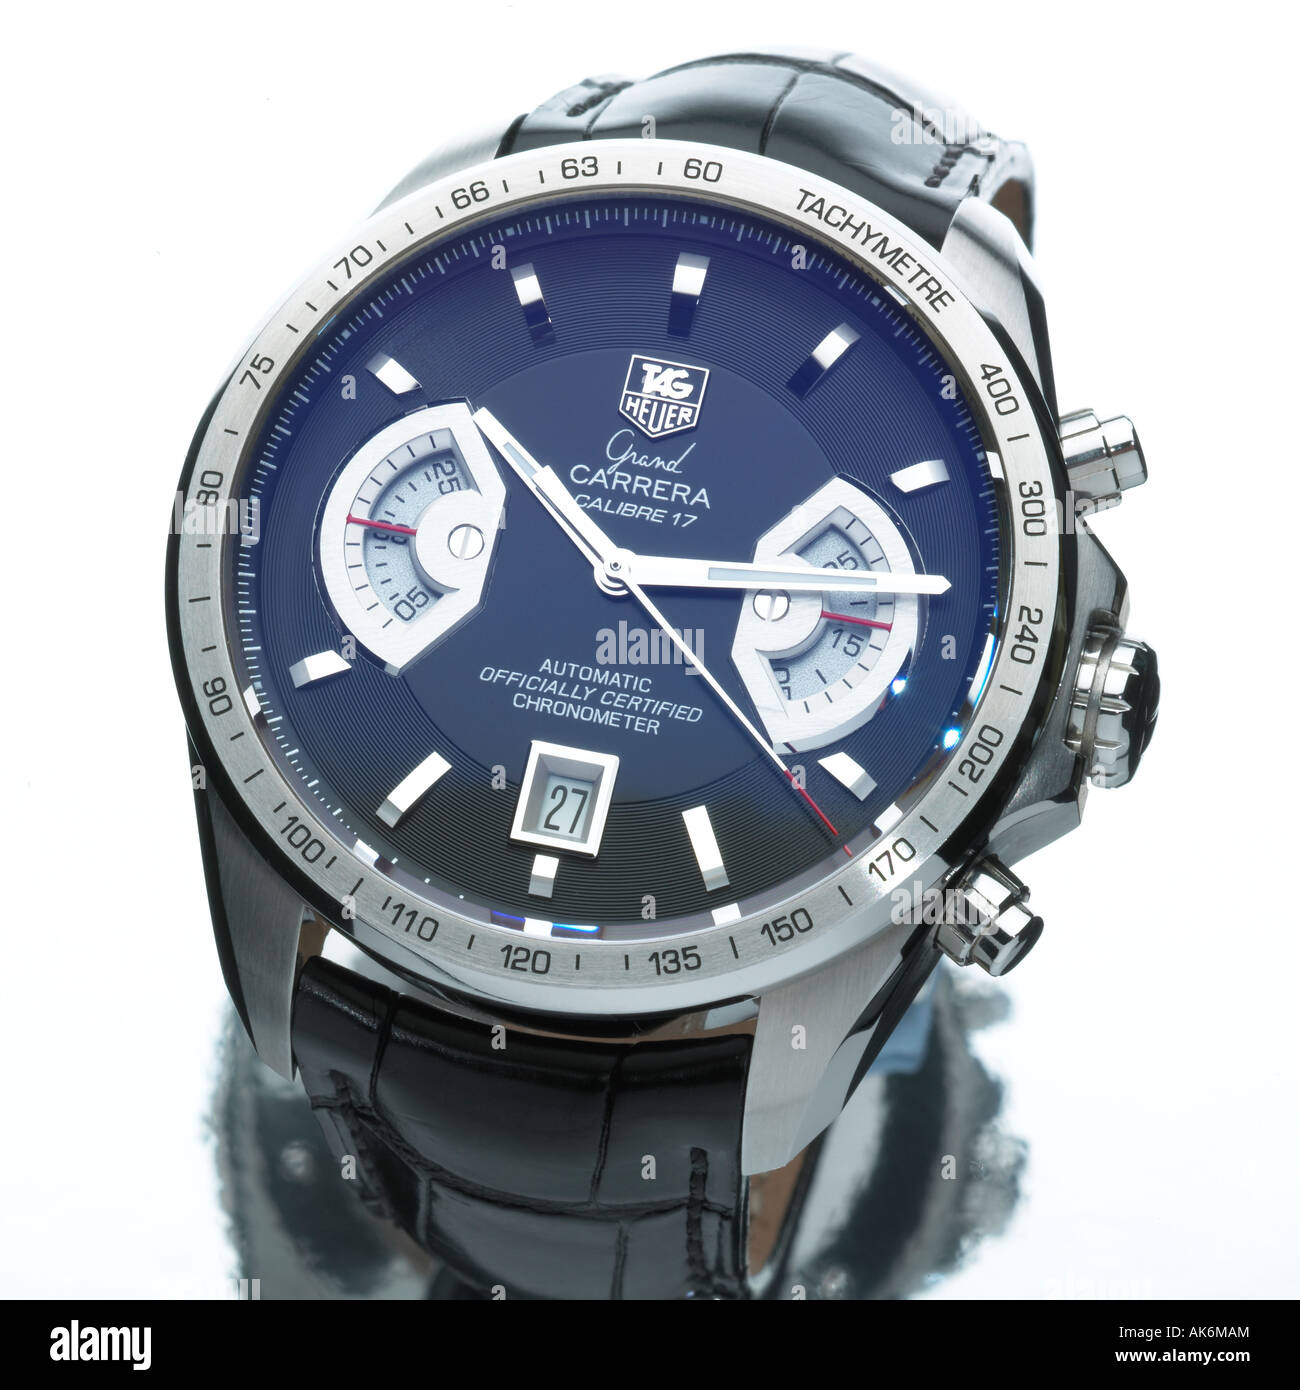 Tag Heuer Grand Carrera Automatic reloj de pulsera suizo Fotografía de  stock - Alamy